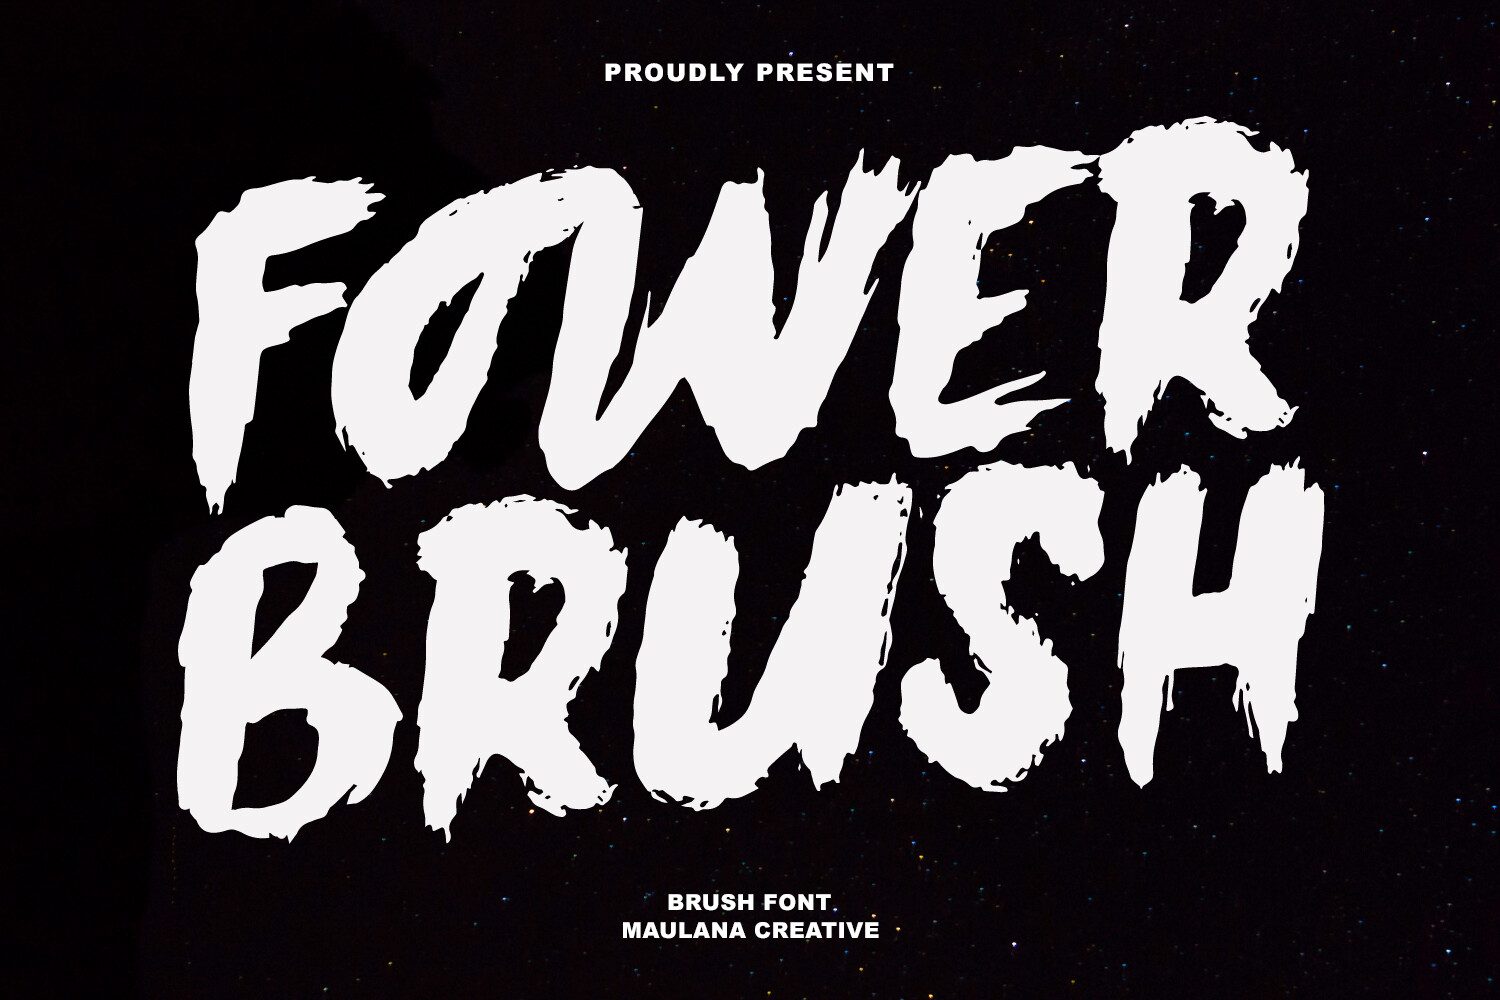 Fower Brush Font